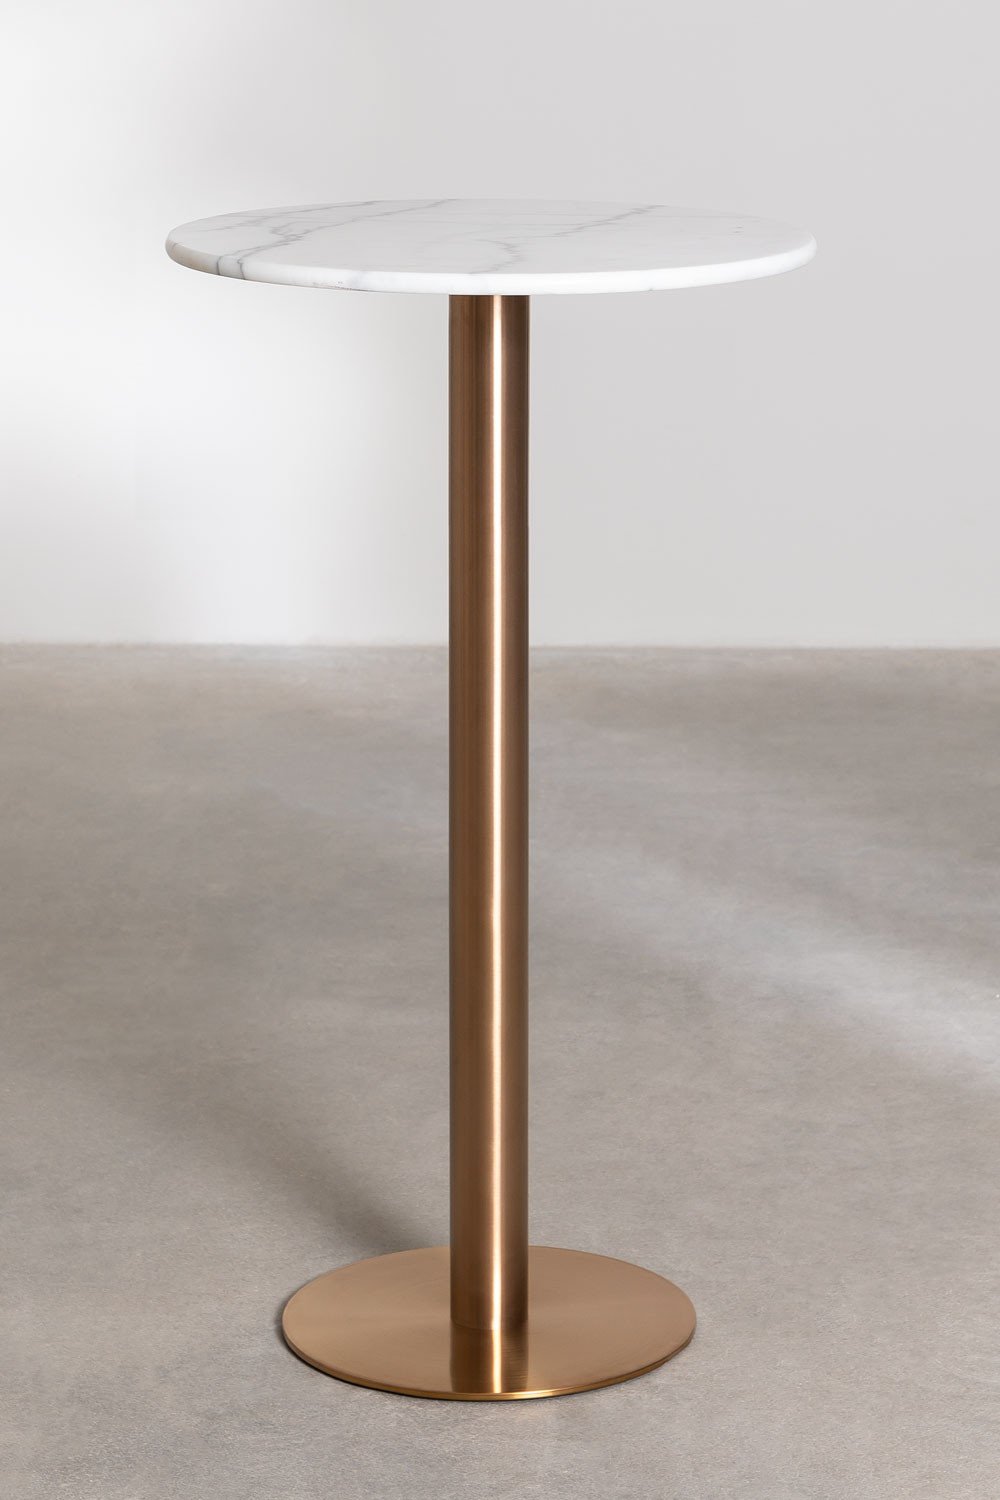 Ronde hoge bartafel in marmer (Ø60 cm) metallic Chack, galerij beeld 1